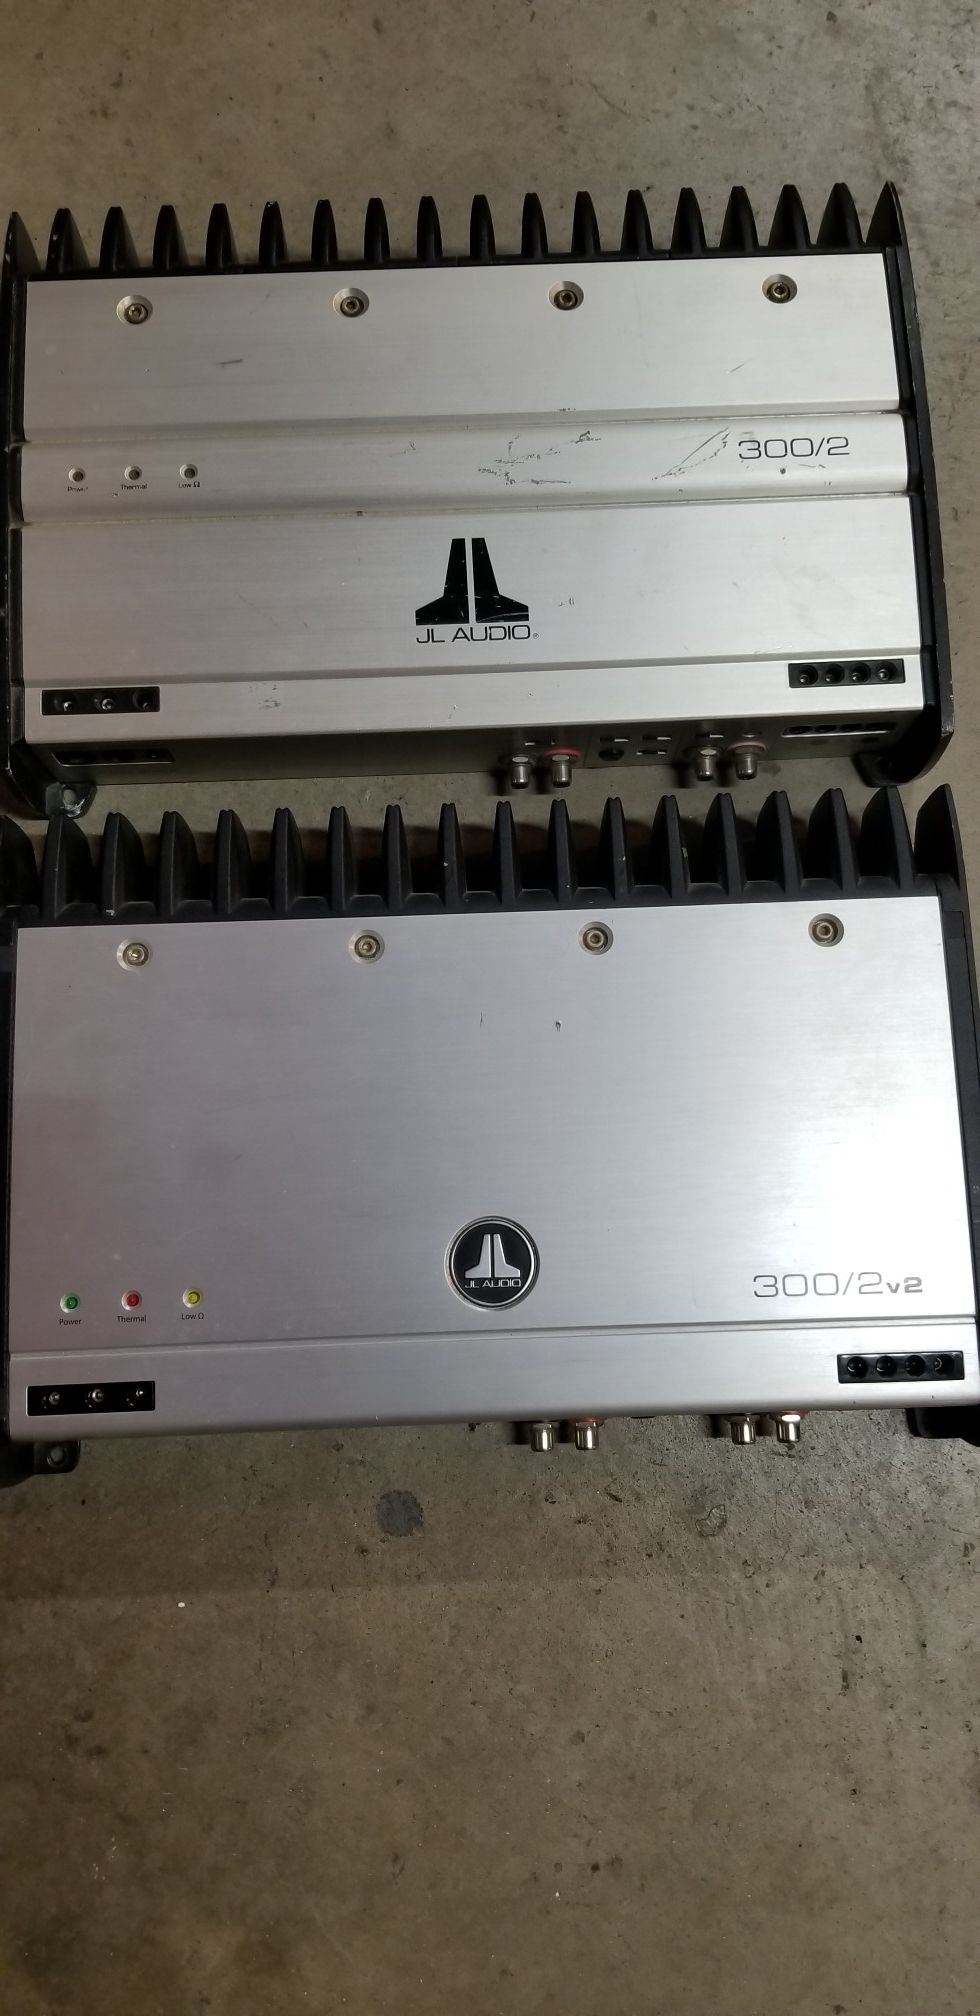 2 JL Audio amplifiers 300x2